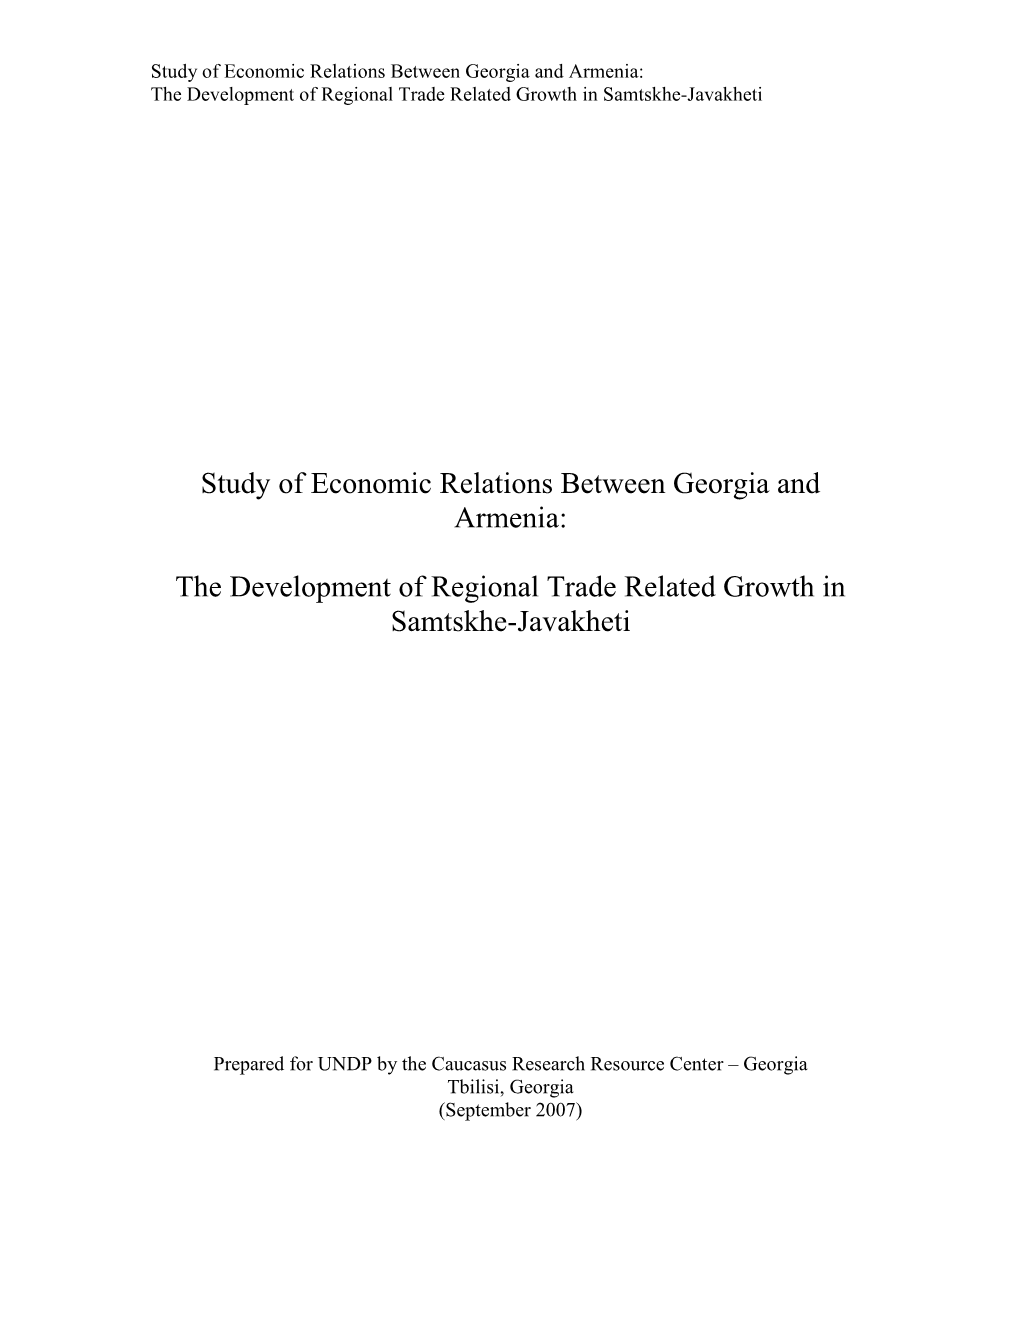 Study of Economic Relations Between Georgia and Armenia: the Development of Regional Trade Related Growth in Samtskhe-Javakheti